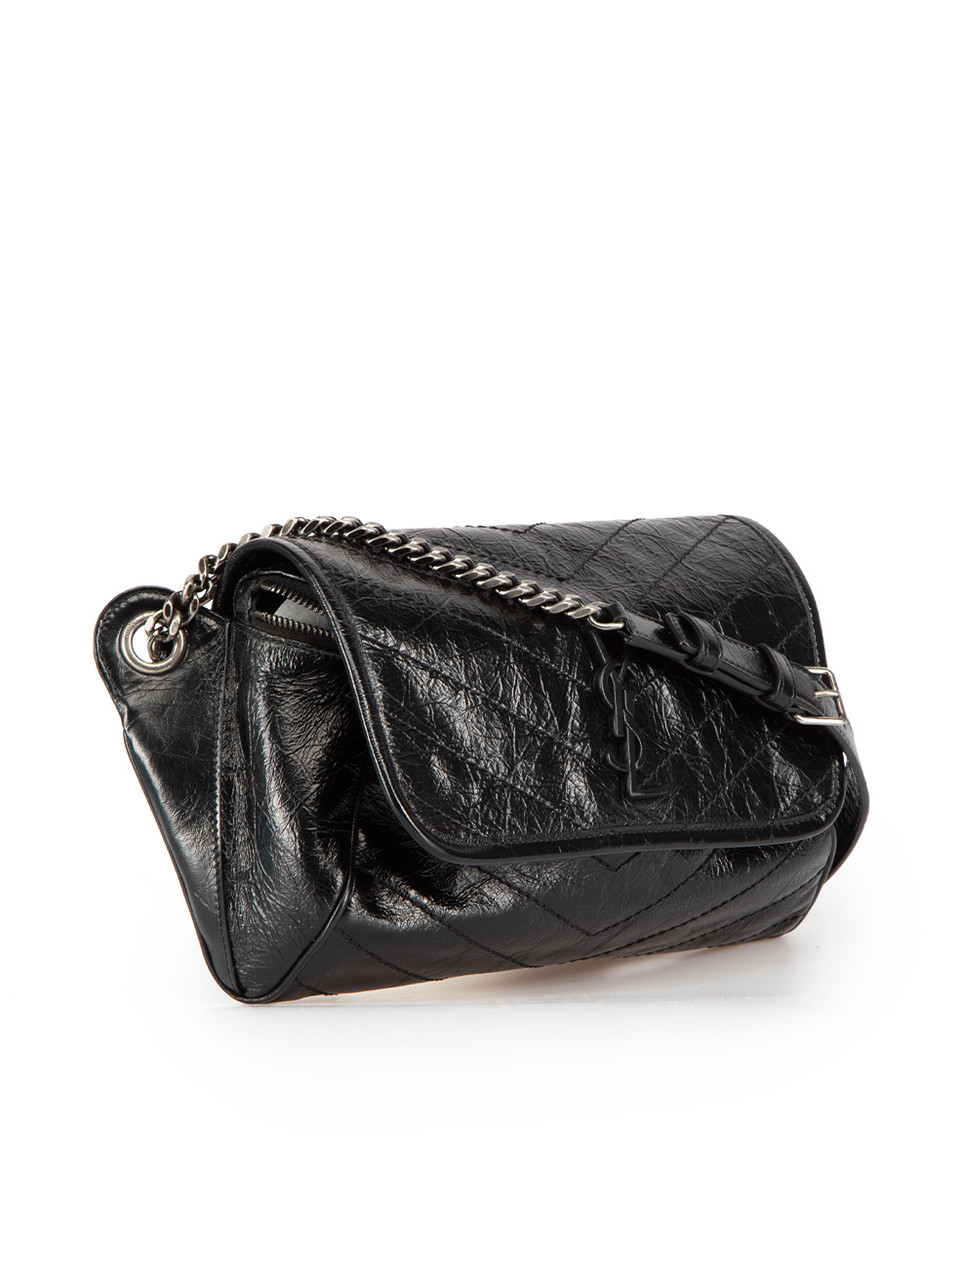 Saint Laurent Black Leather Niki Medium Belt Bag